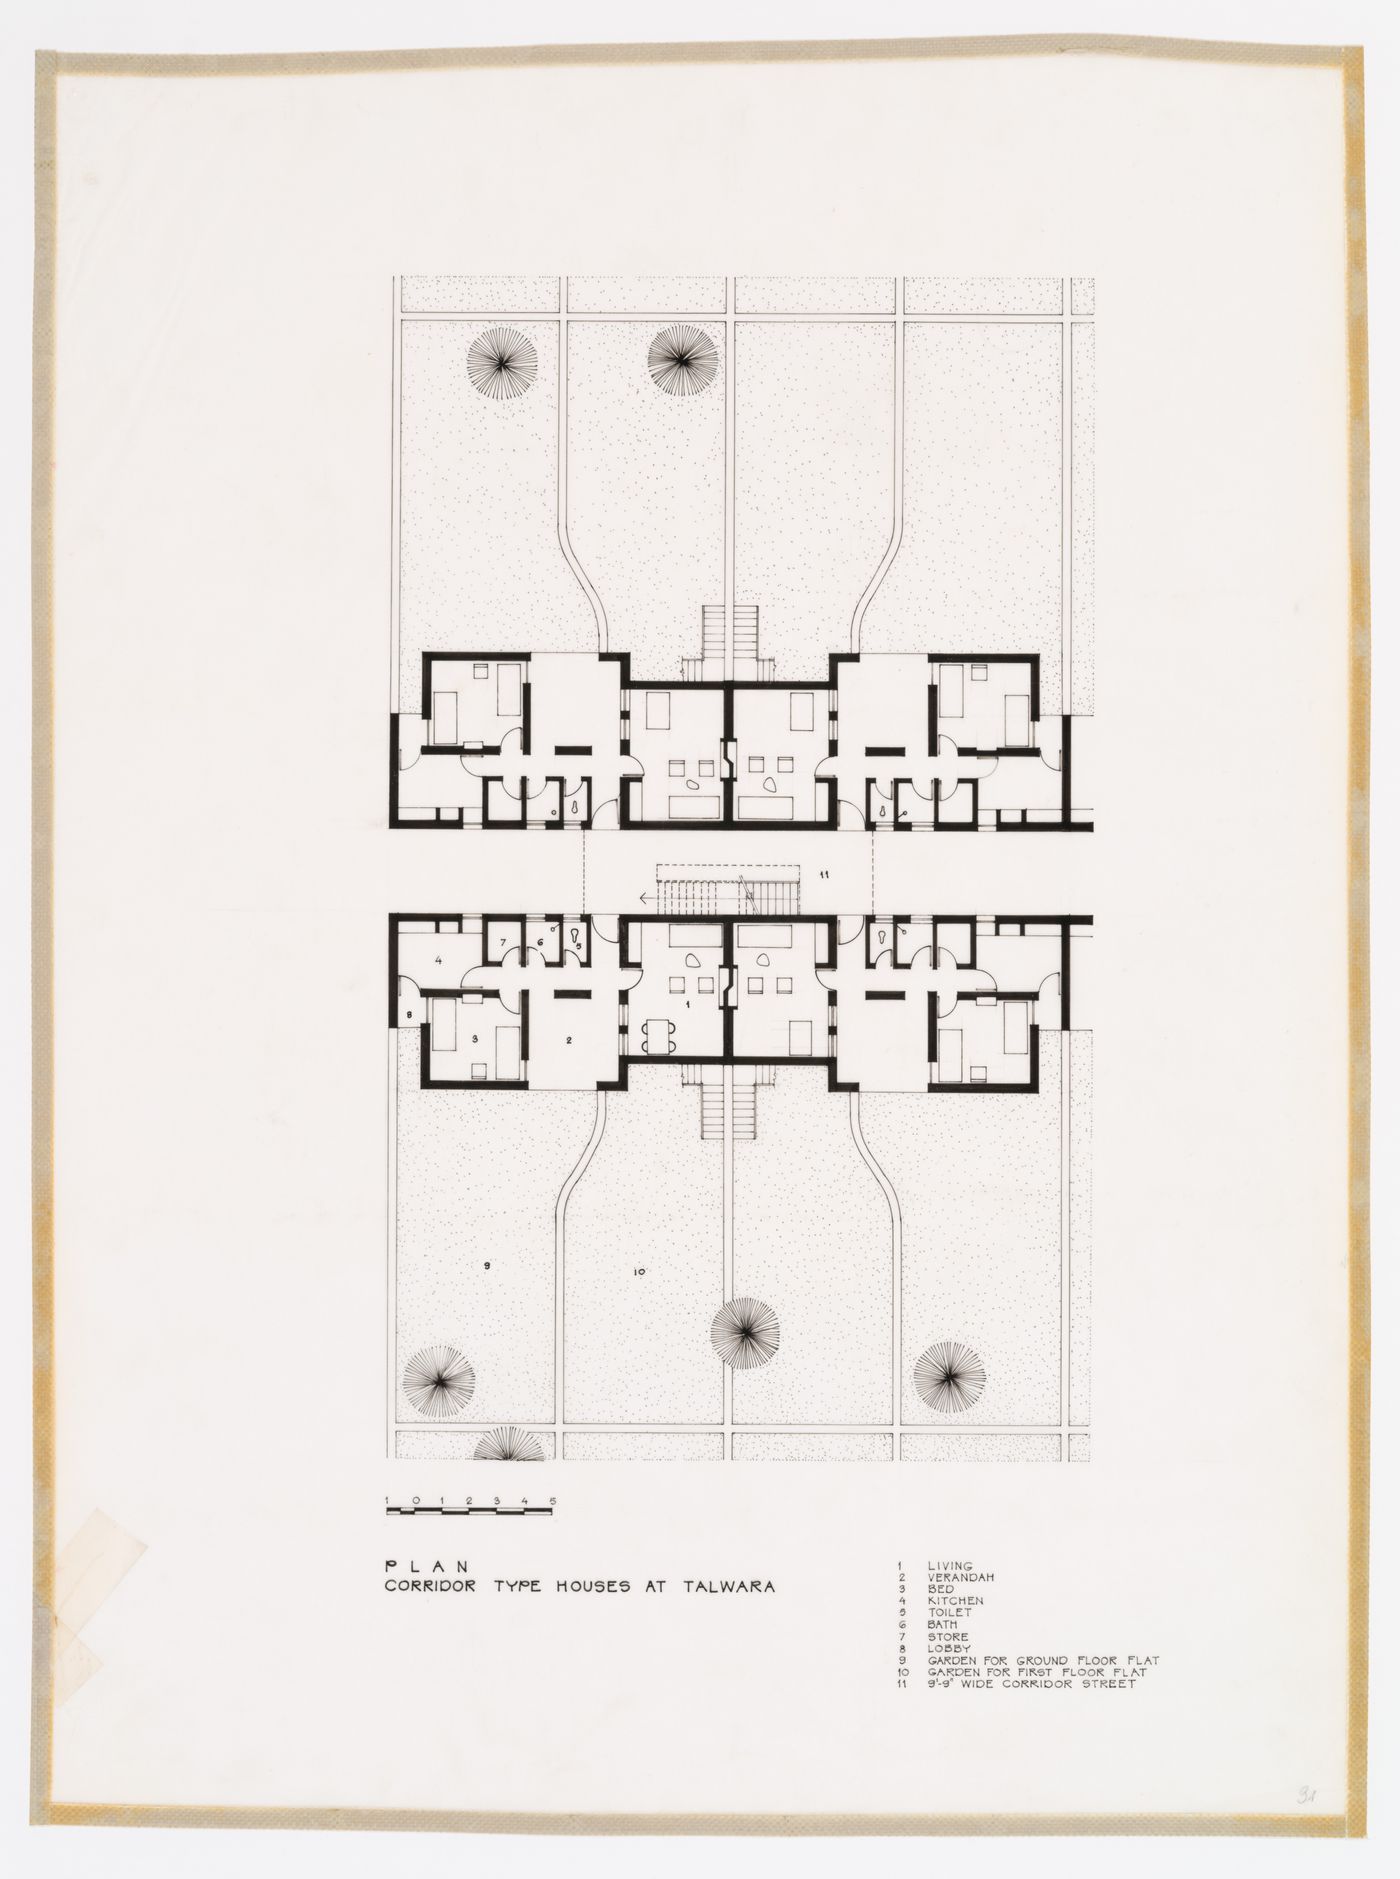 Plan for the Corridor type houses at Talwara, India